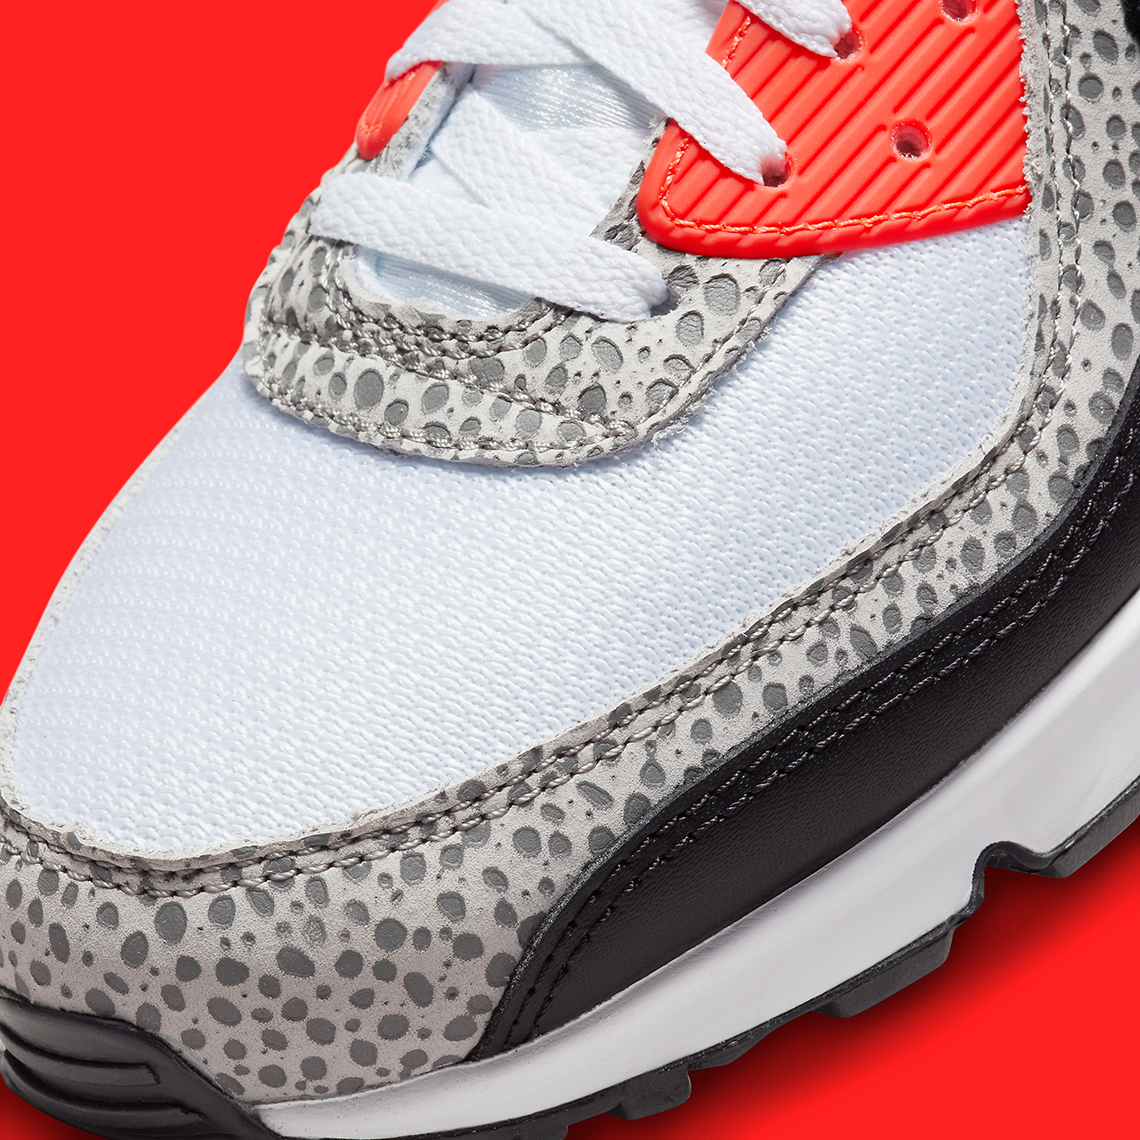 Safari Print And Infrared Hues Decorate The Nike Air Max 90 “Kiss My Airs” LaptrinhX / News